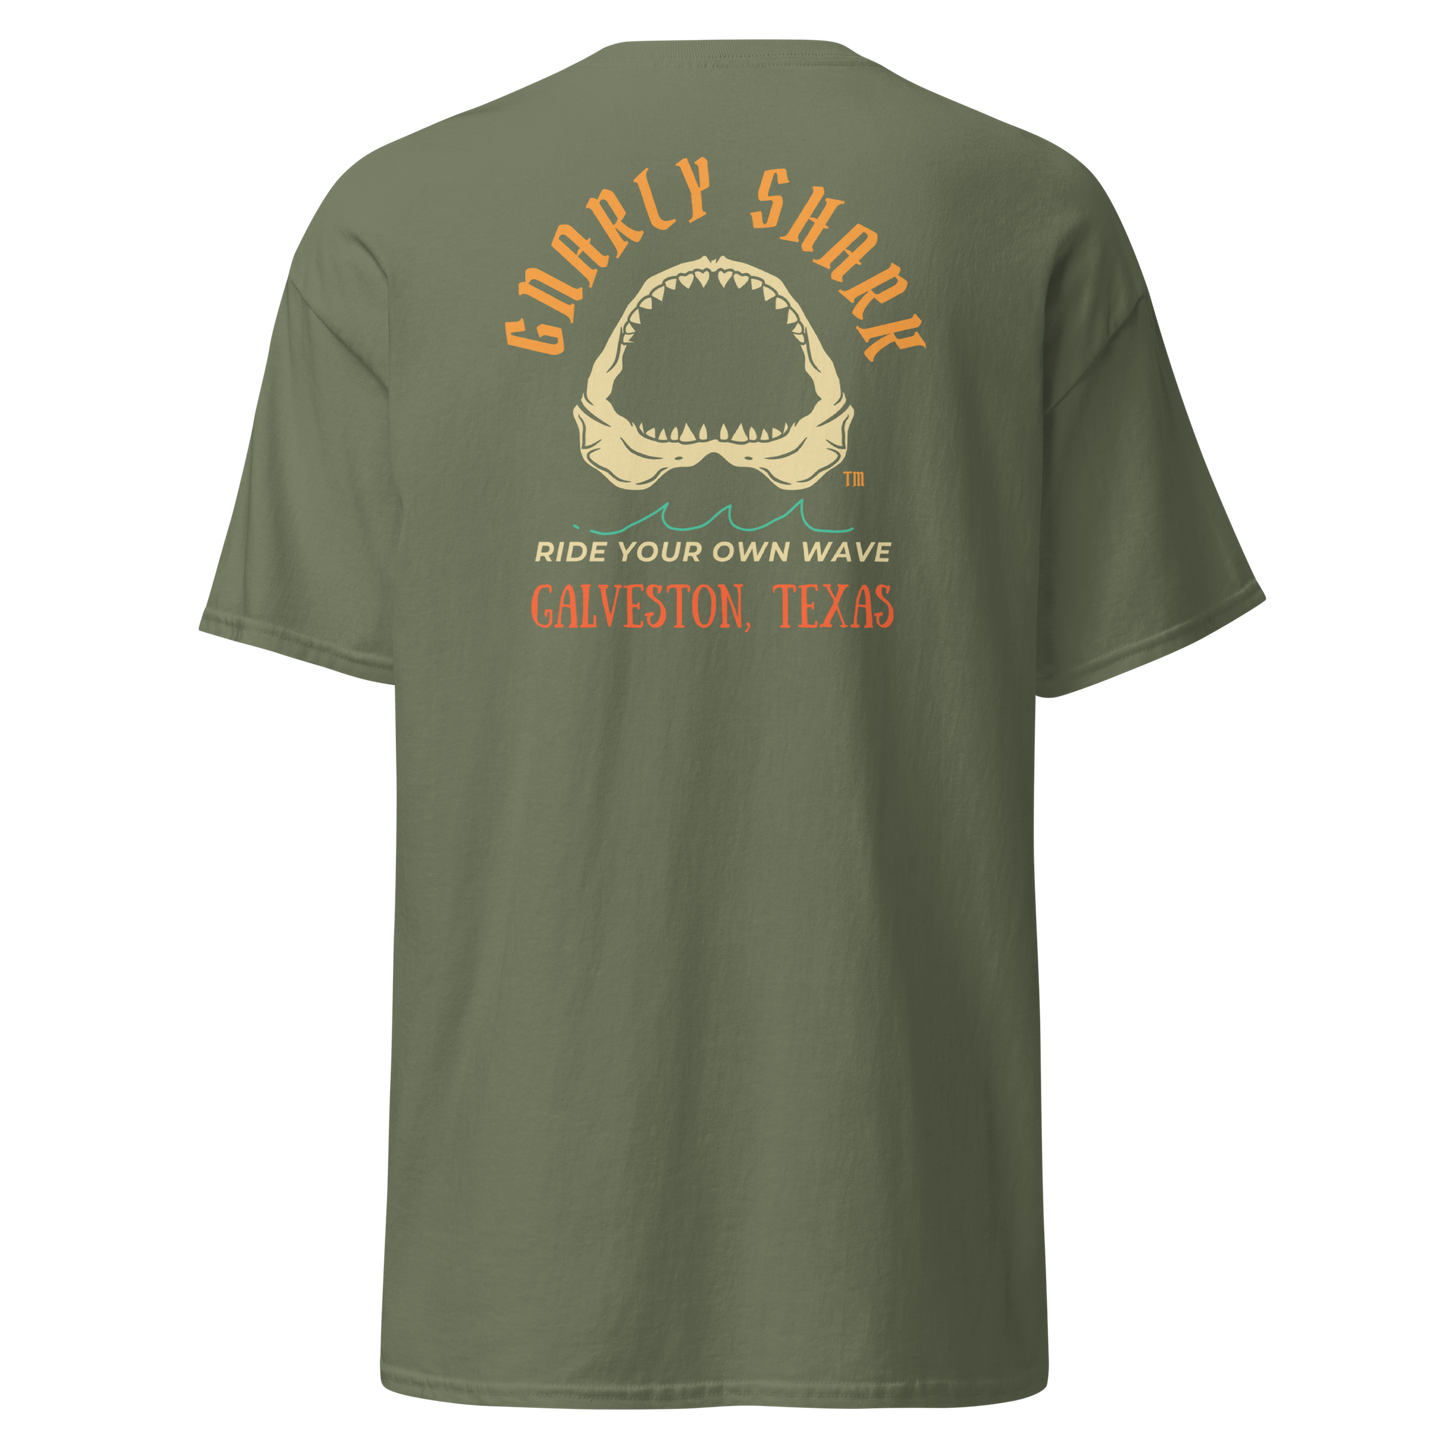 Gnarly Shark Galveston Texas T-Shirt - Front / Back - Gildan classic 5000